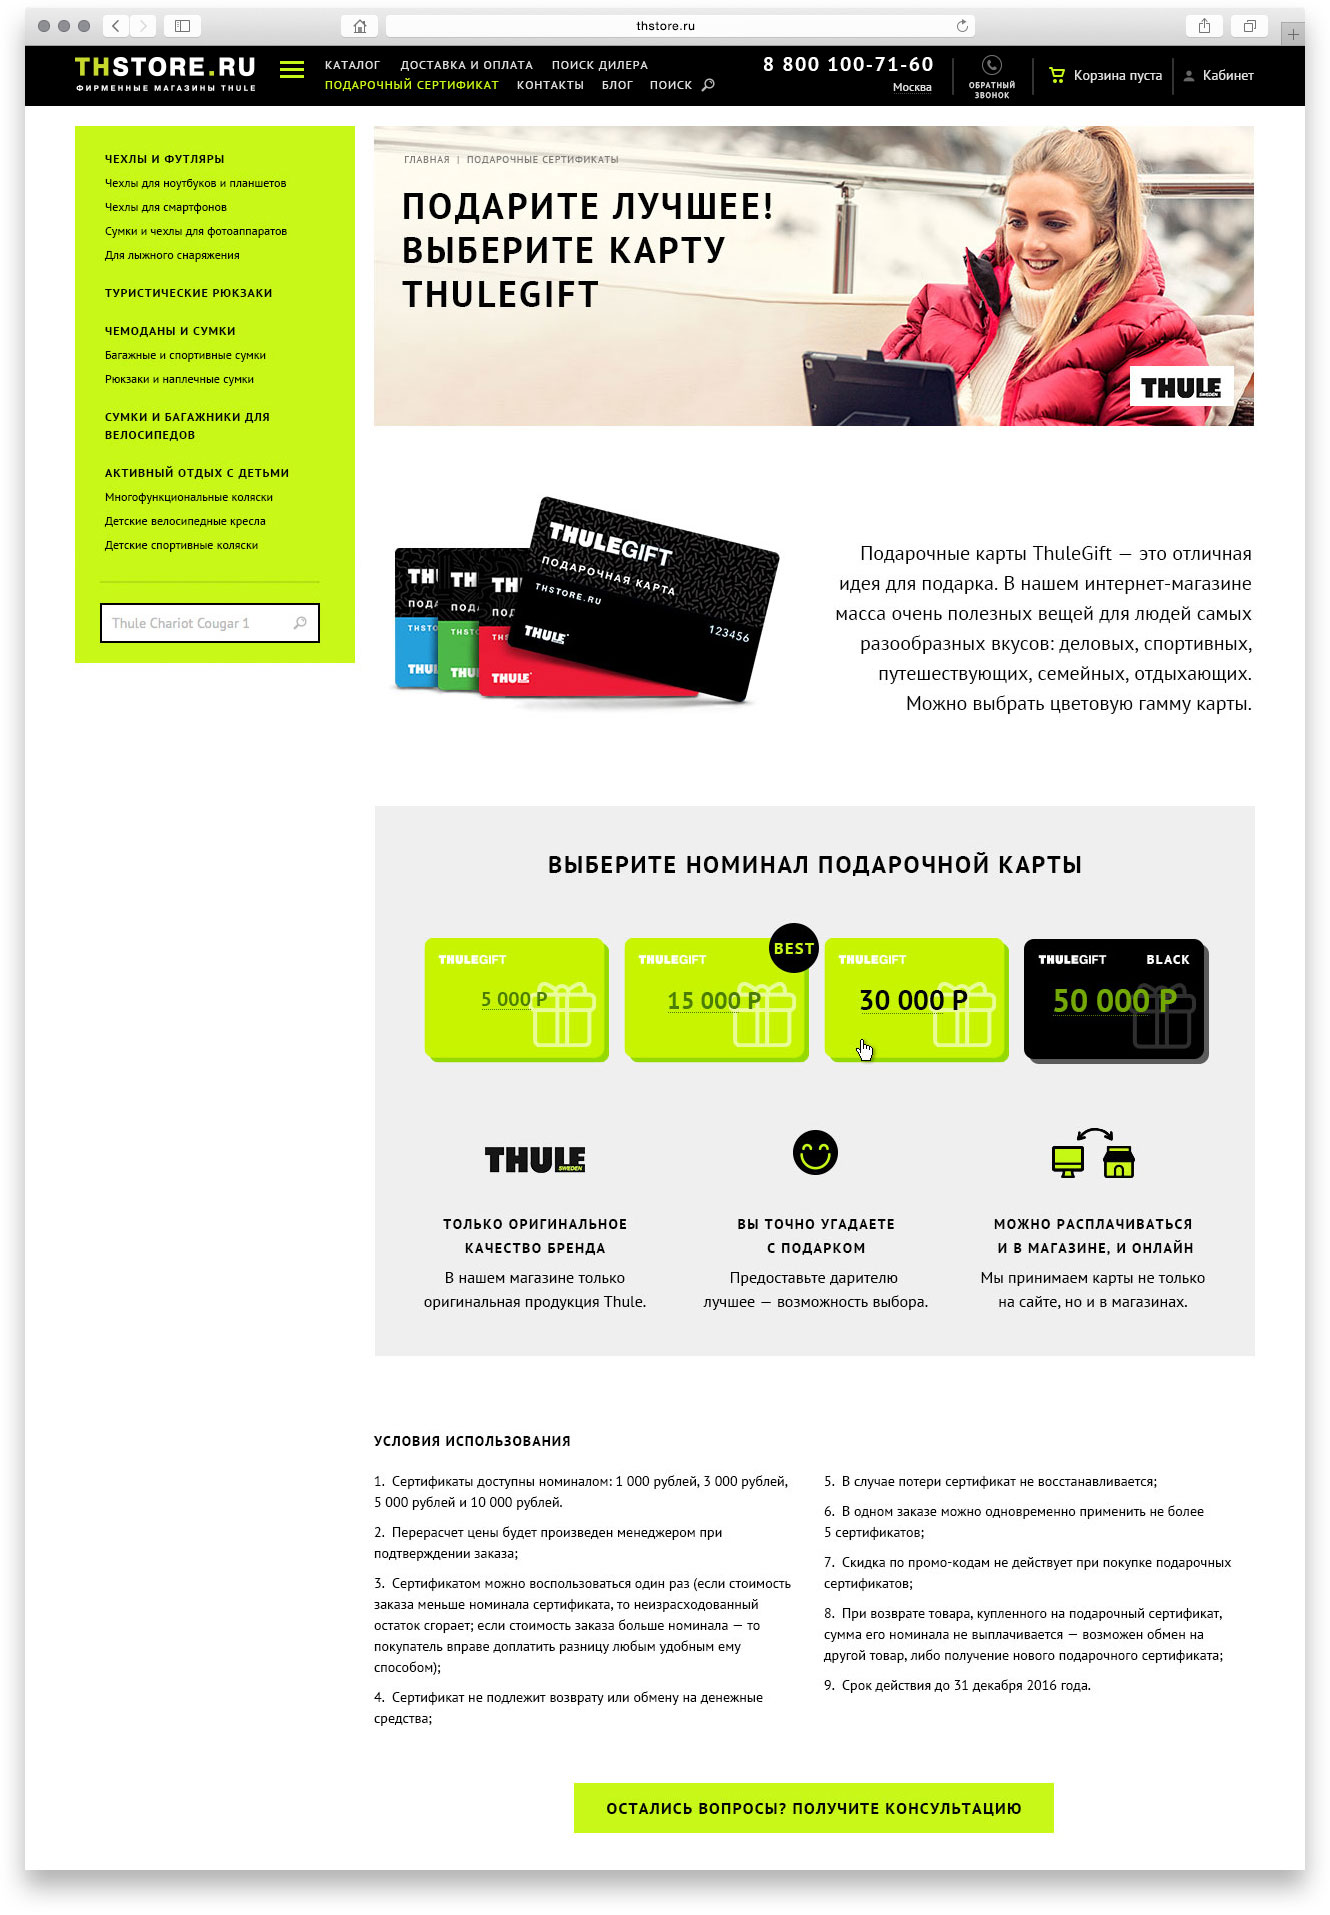 Дизайн фирменного интернет-магазина Thule